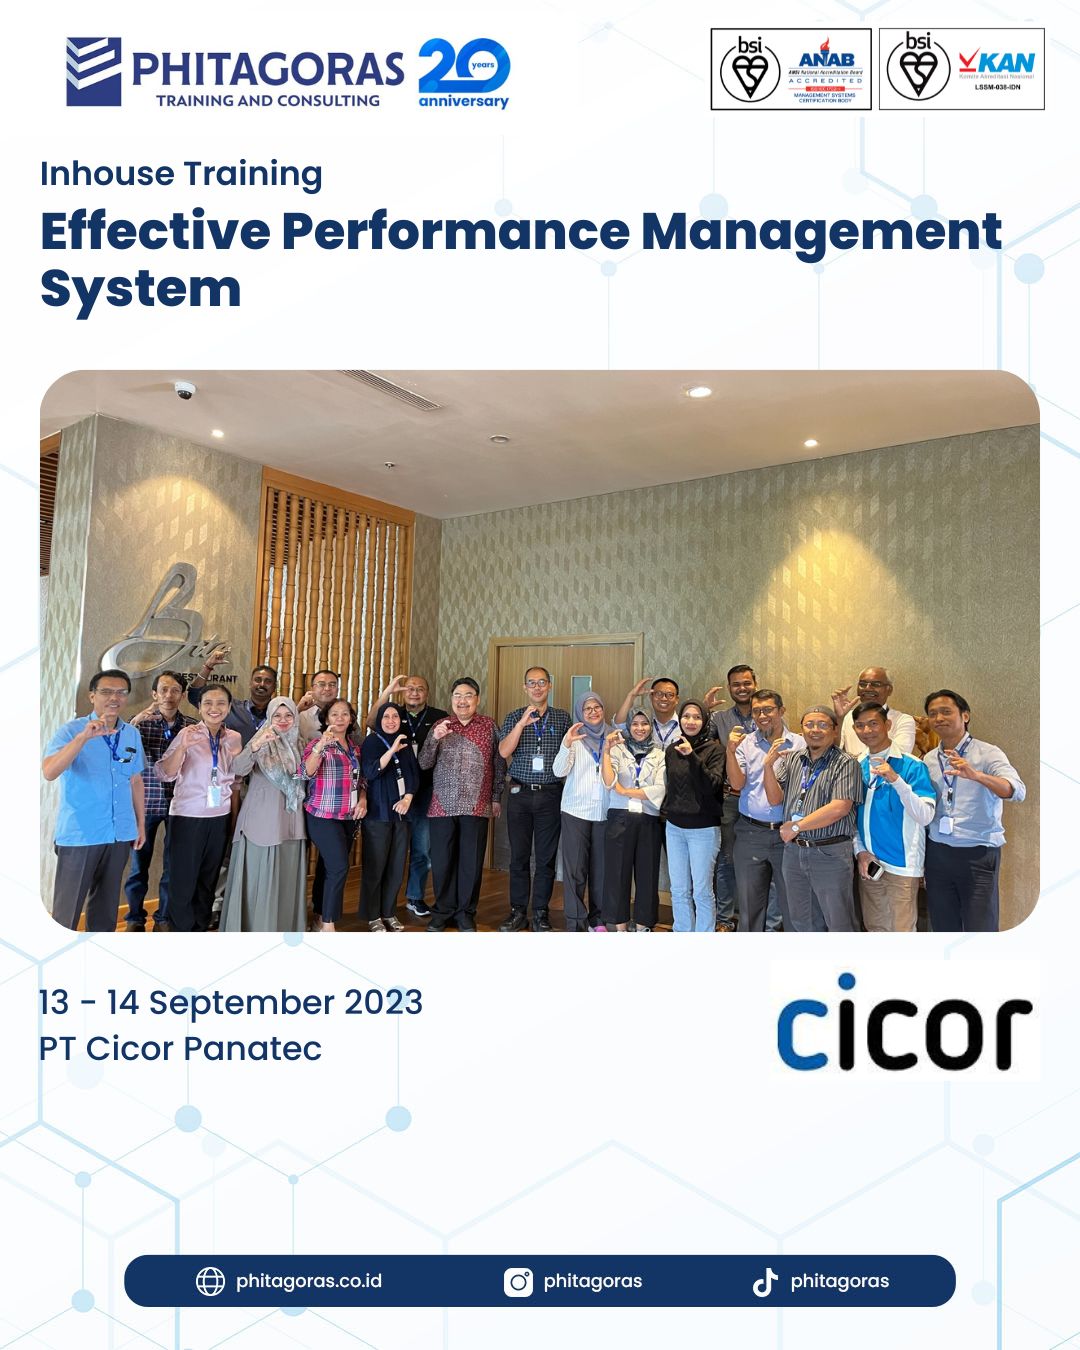 Inhouse Training Effective Performance Management System - PT Cicor Panatec